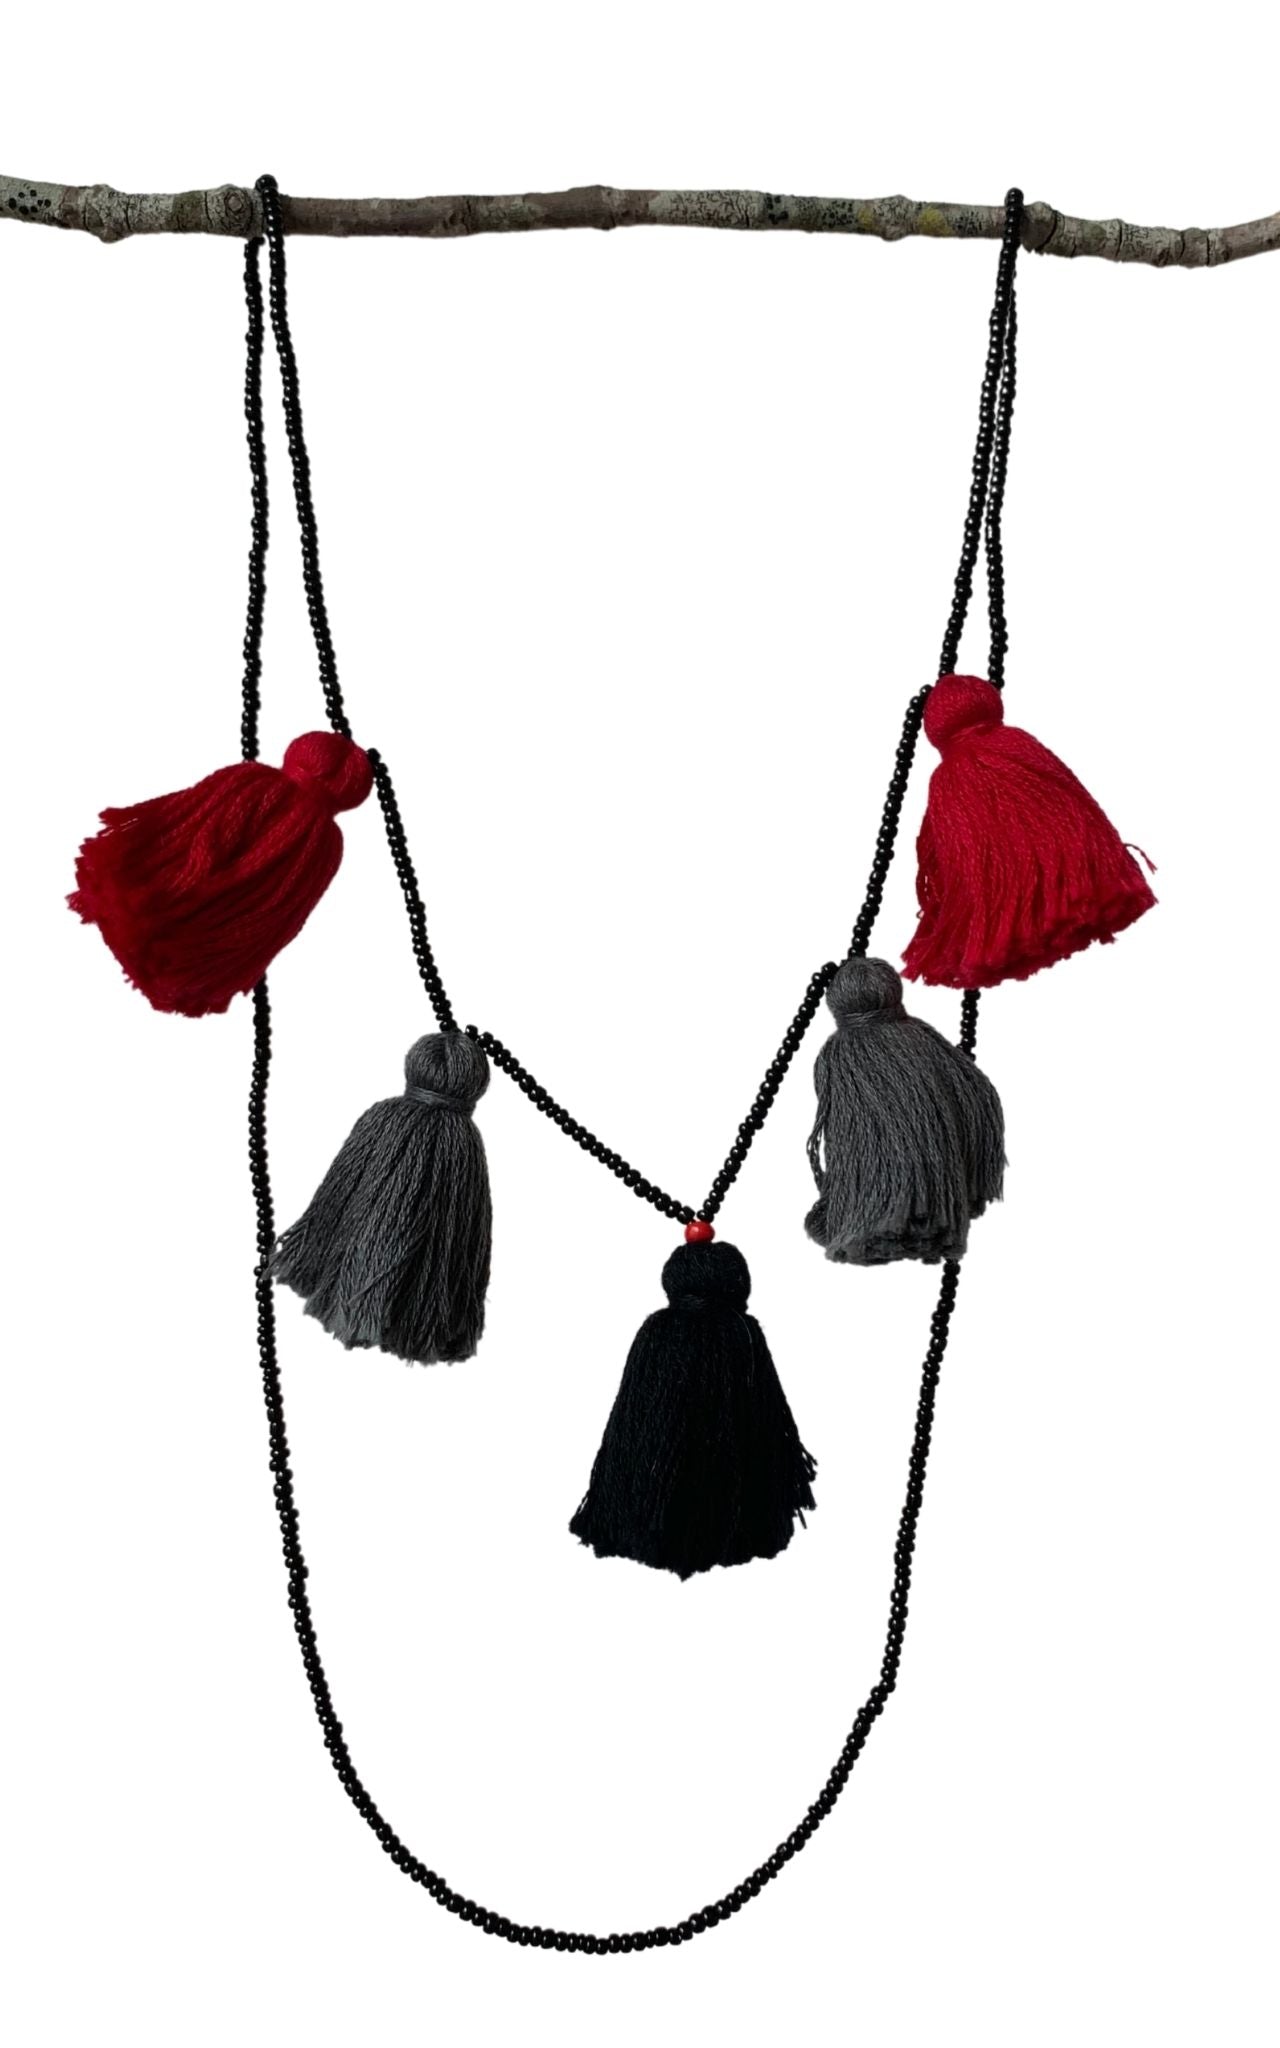 Surya Australia Ethical Cotton Tassel Necklaces from Nepal - Nidra